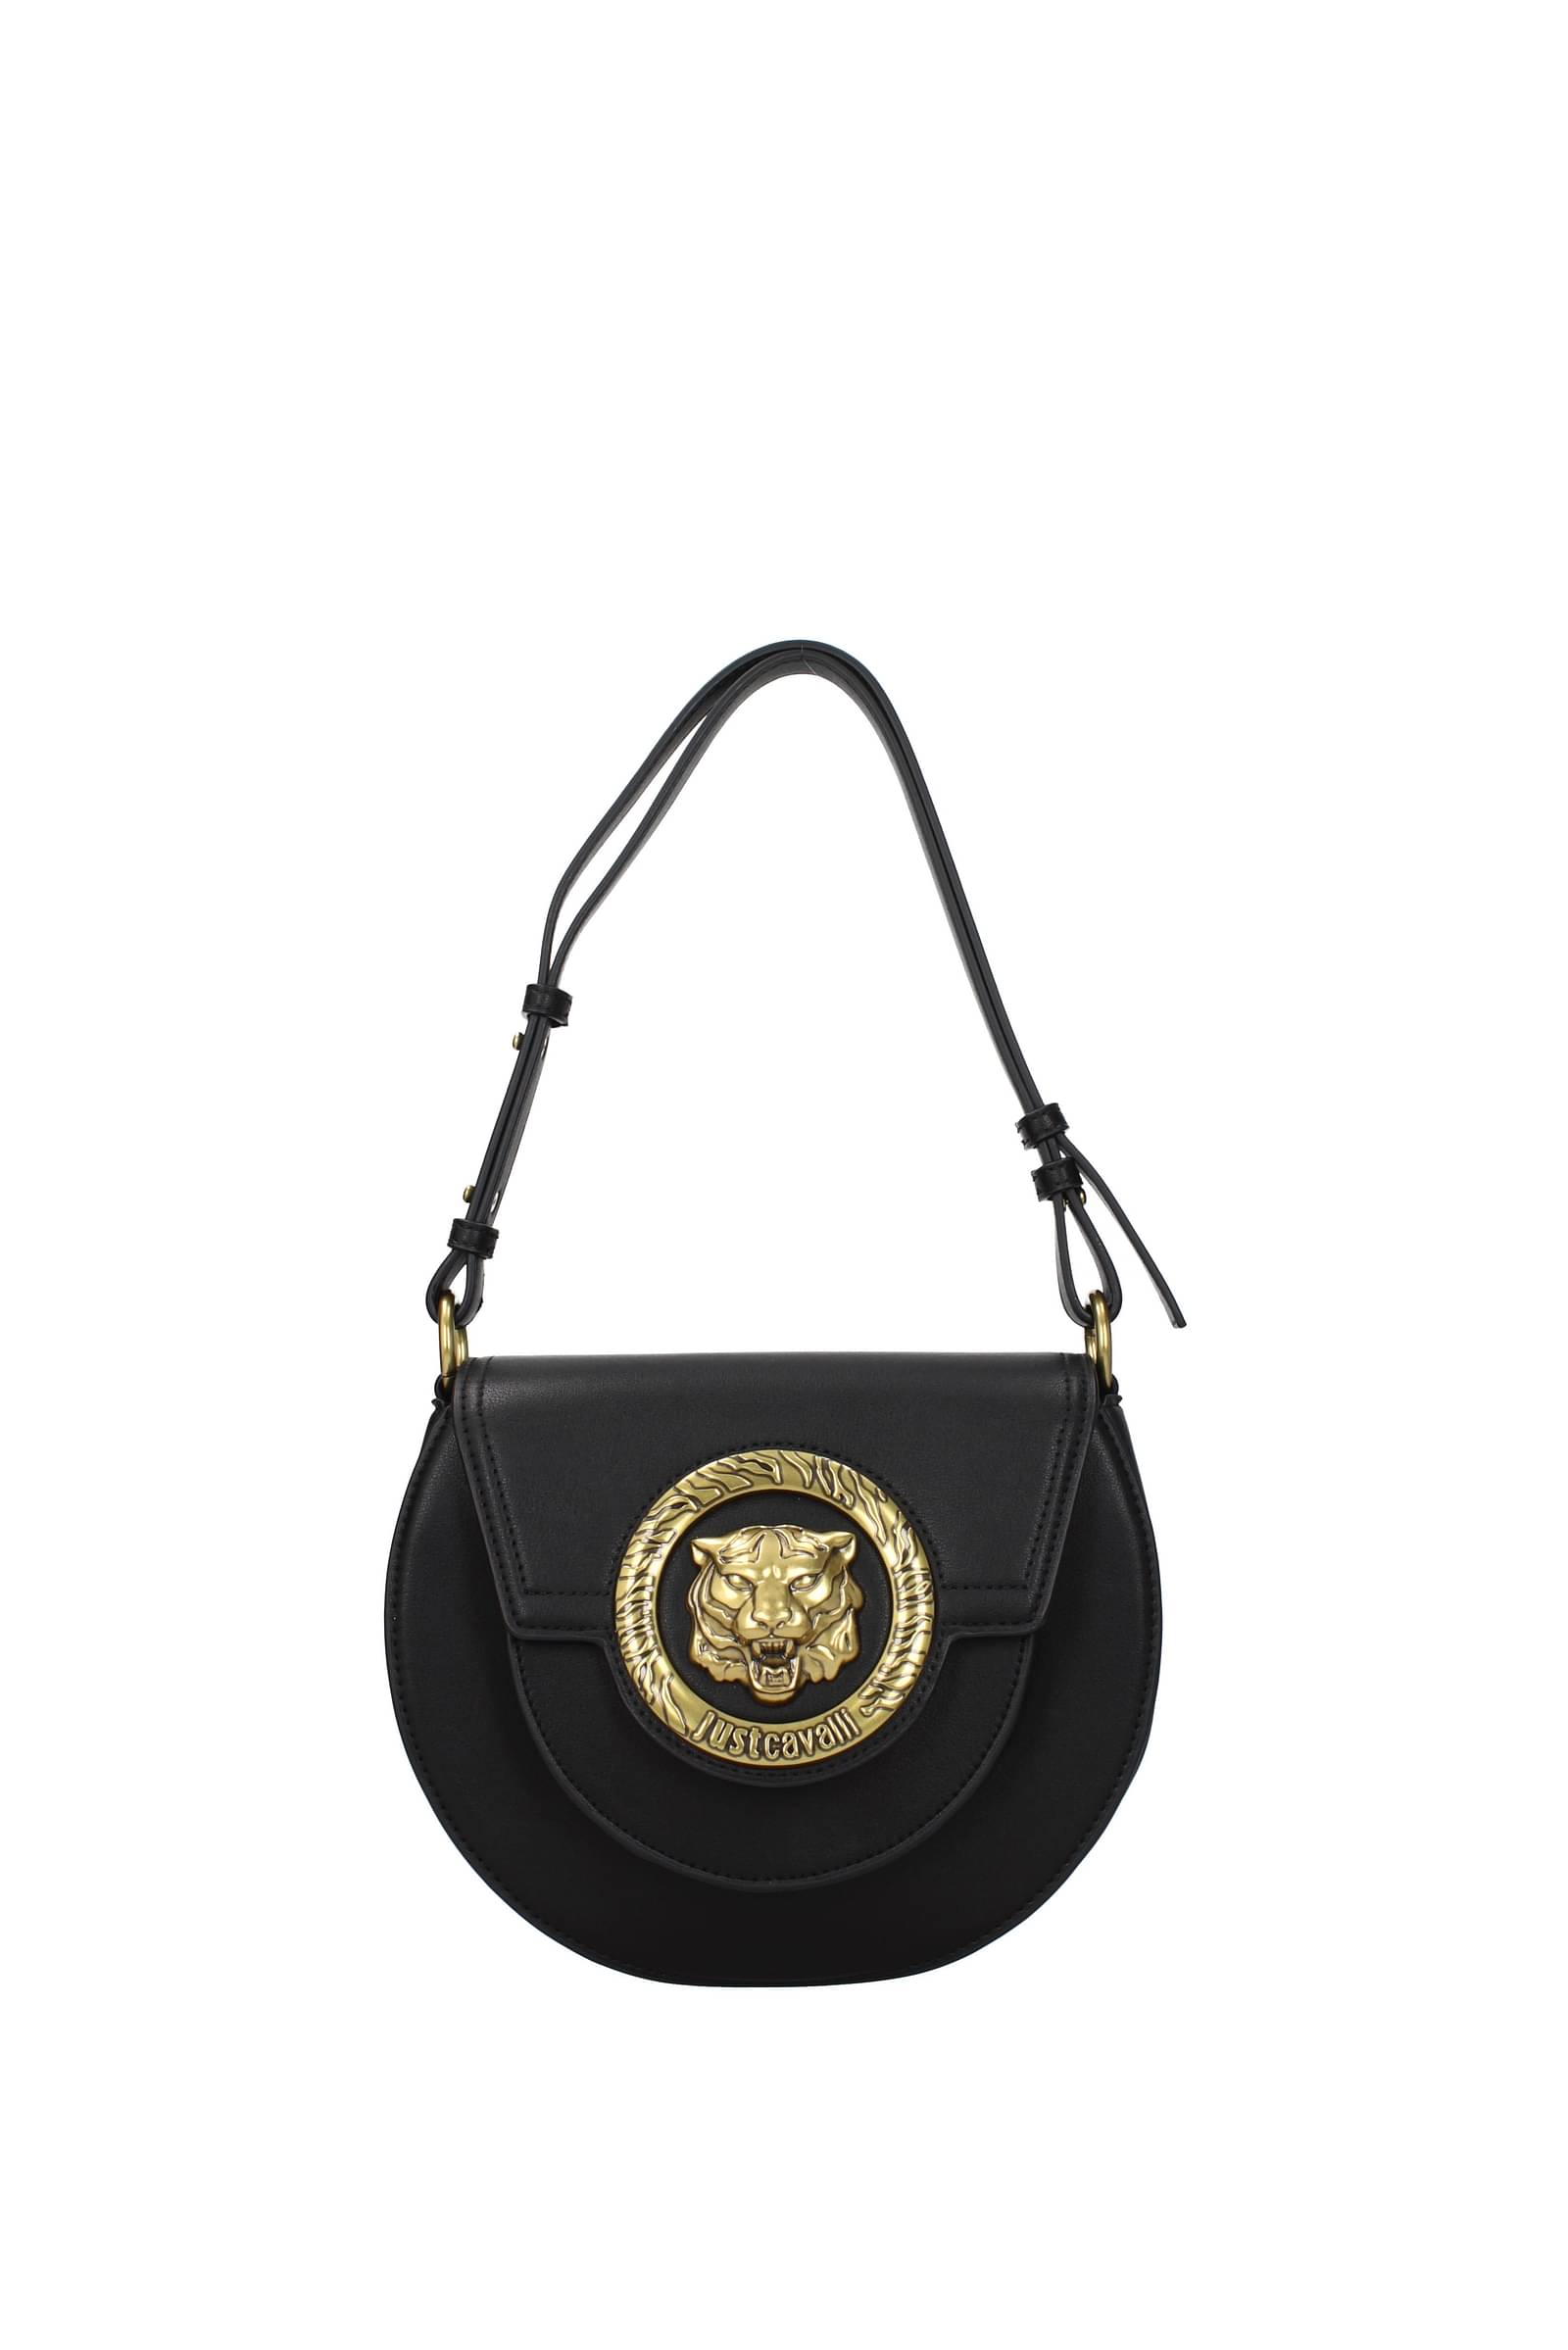 100% Authentic Mint JUST CAVALLI Rn125723 Black LEATHER Suede Trim Shoulder  Handbag Hobo Chain - Etsy